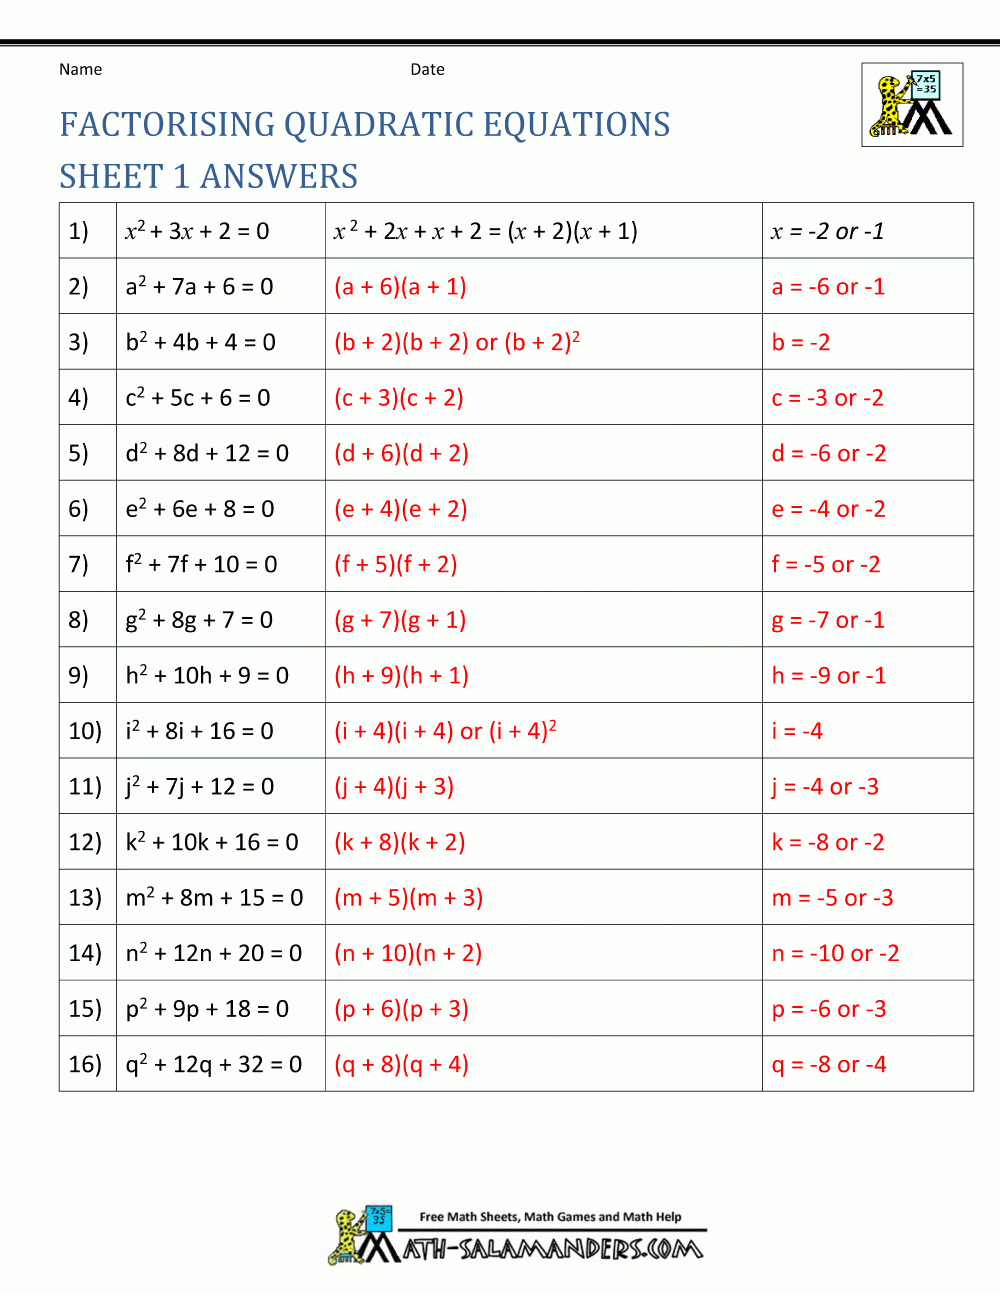 Factoring Quadratic Equations With Quadratic Formula Practice Worksheet